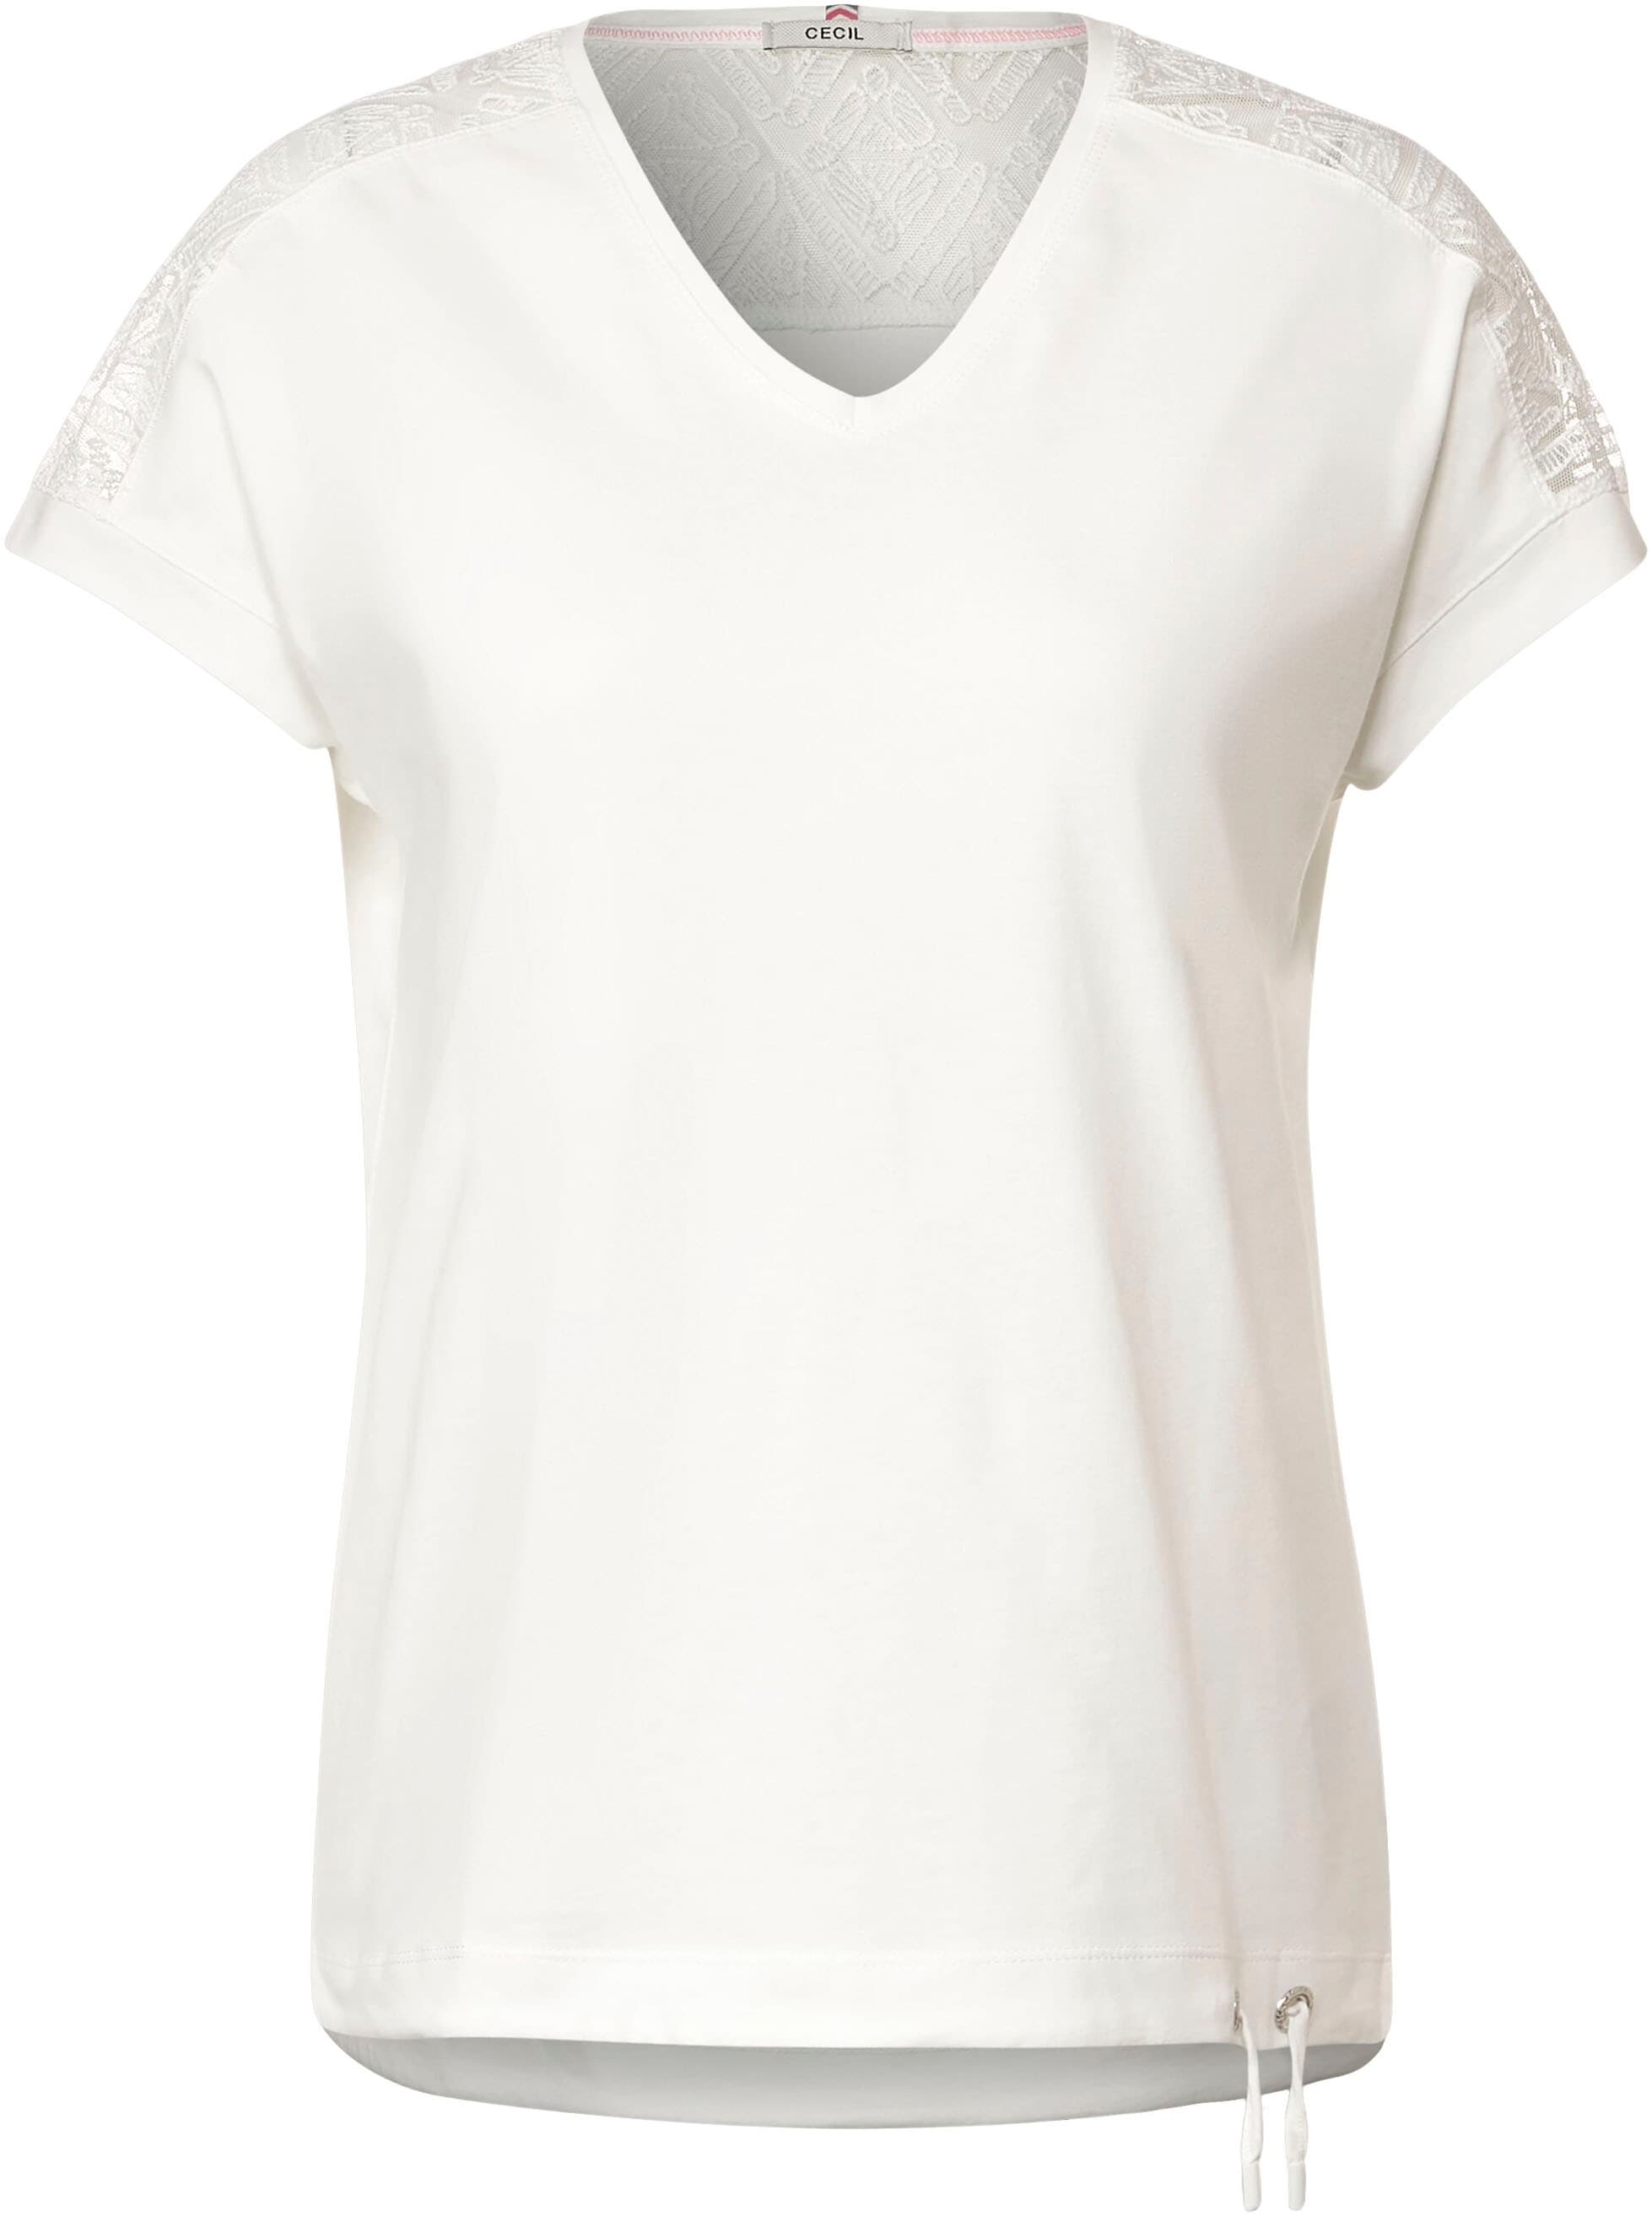 Günstiger Outlet-Store Cecil T-Shirt, mit leicht -Ausschnitt shoppen abgerundetem V